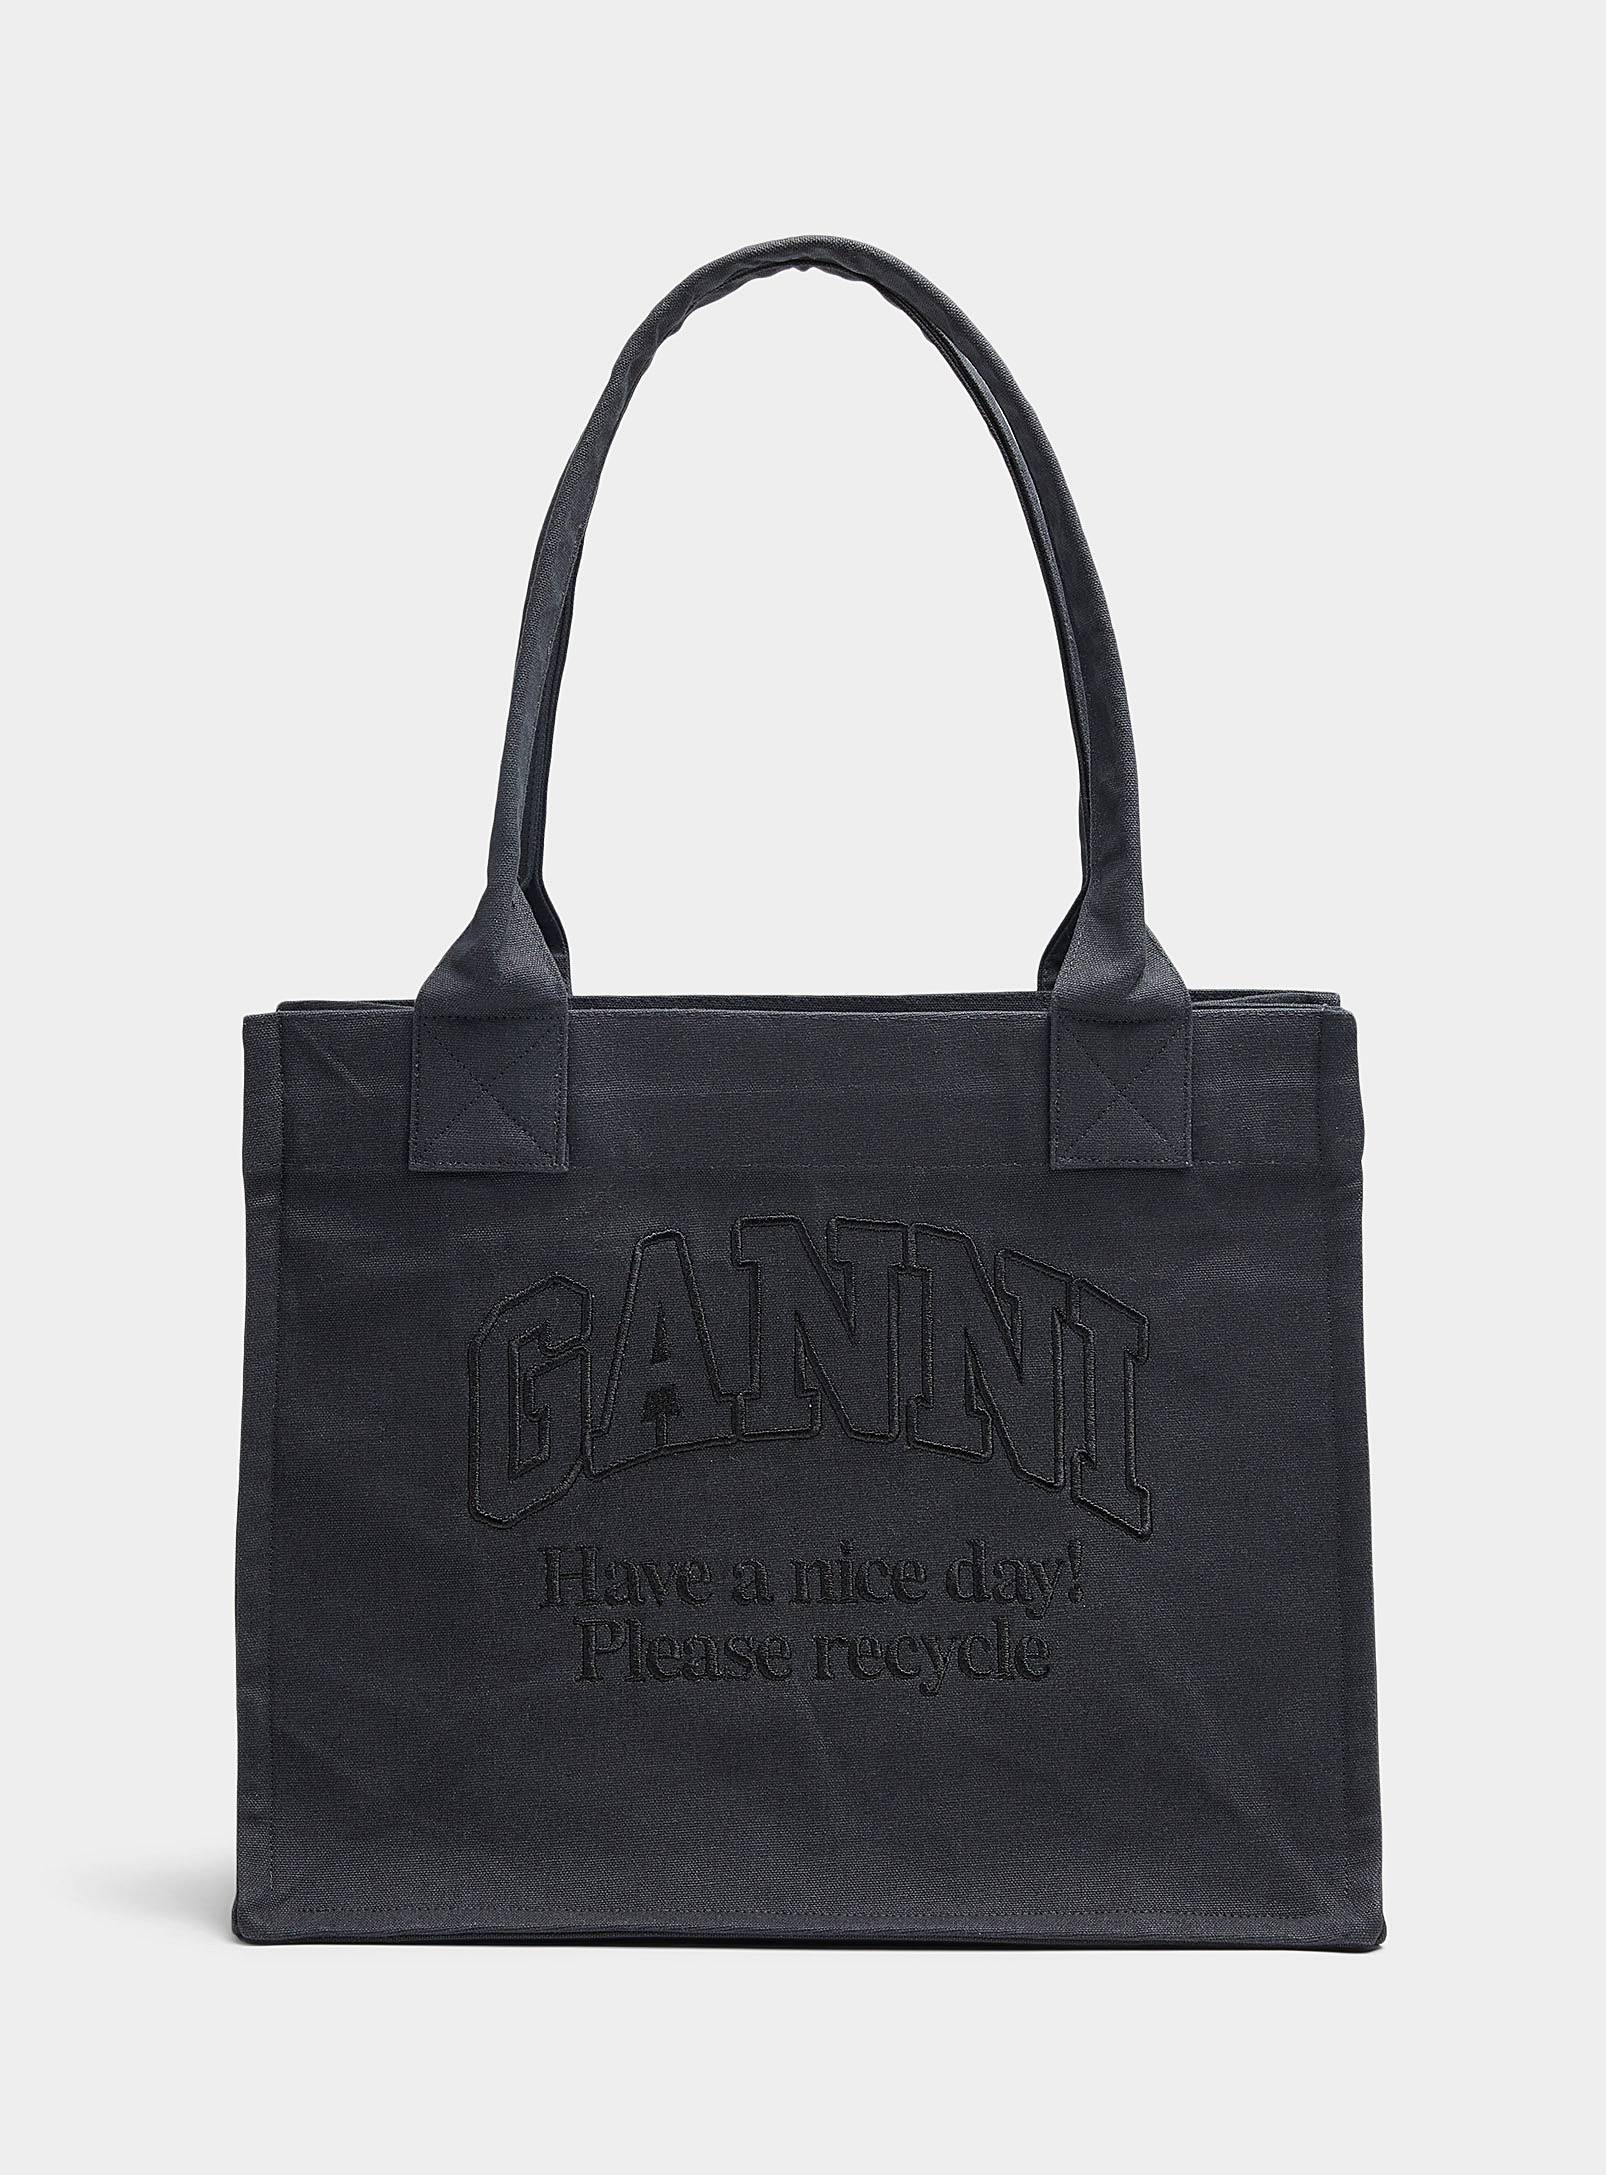 Ganni Please Recycle Tote Bag In Black